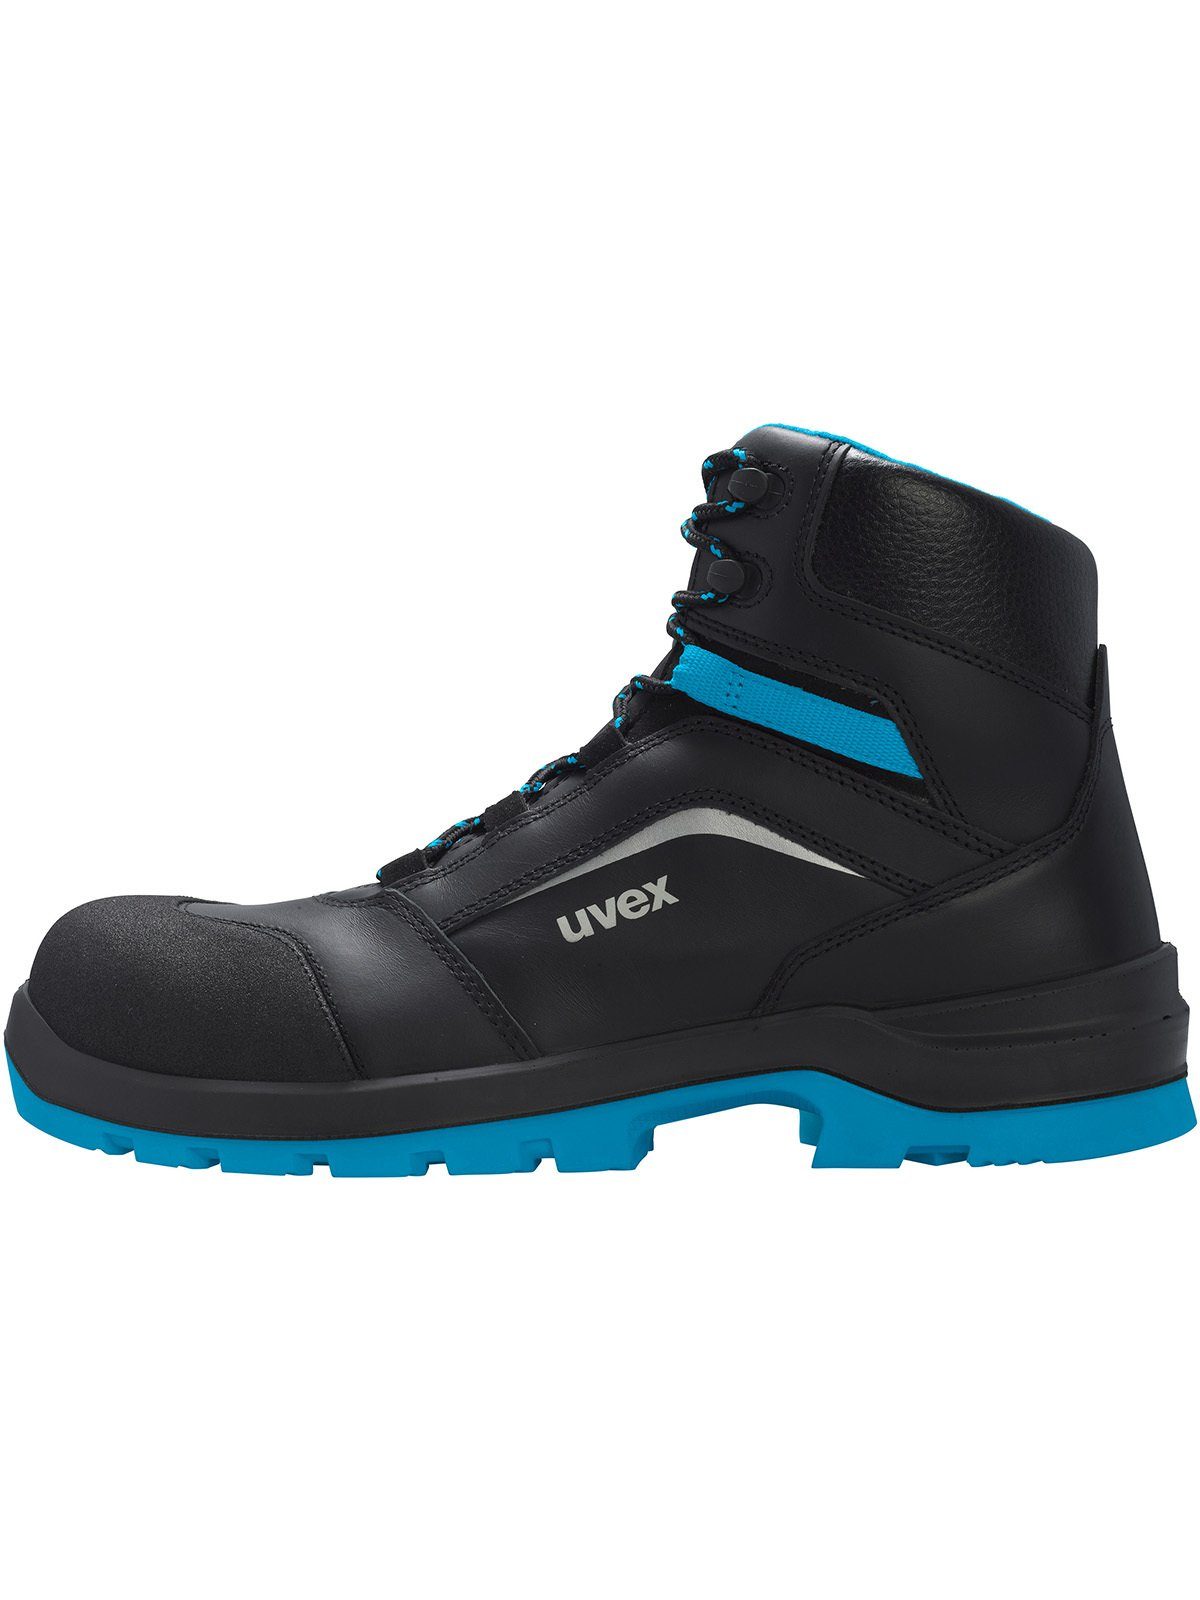 Uvex uvex 2 xenova® S3 SRC Stiefel Stiefel